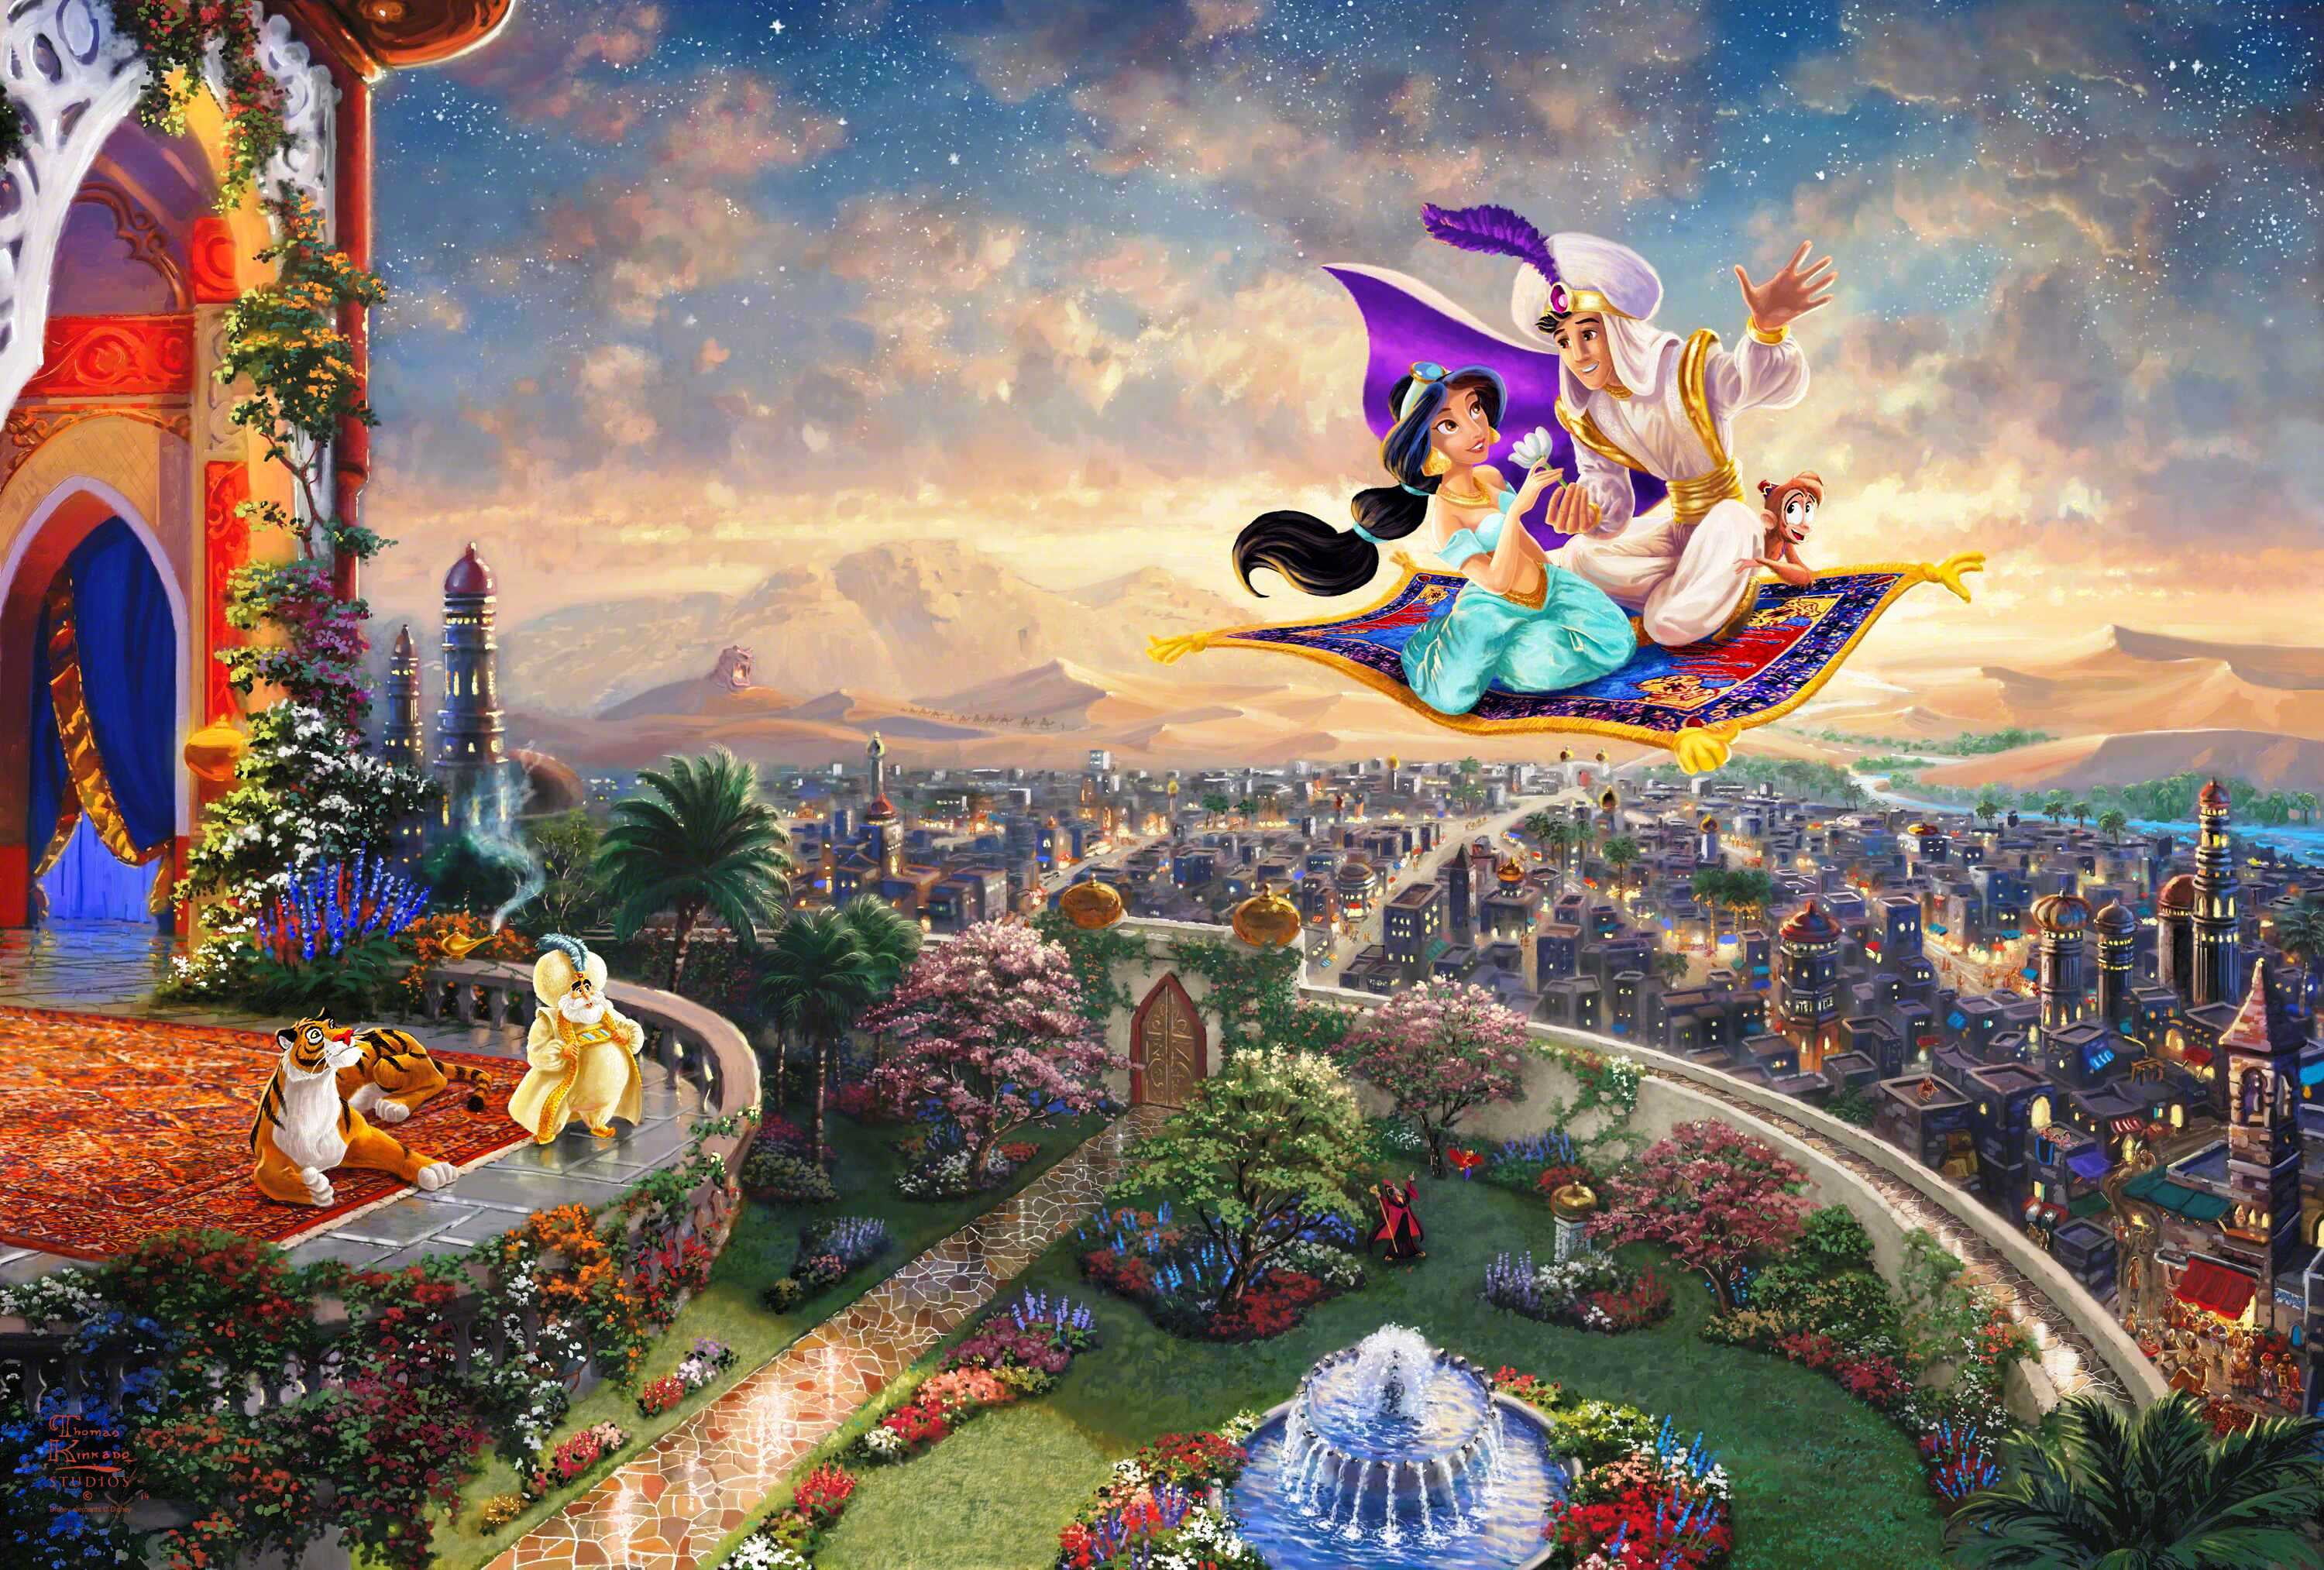 Alladin and Princess Jasmine riding on a carpet illustration